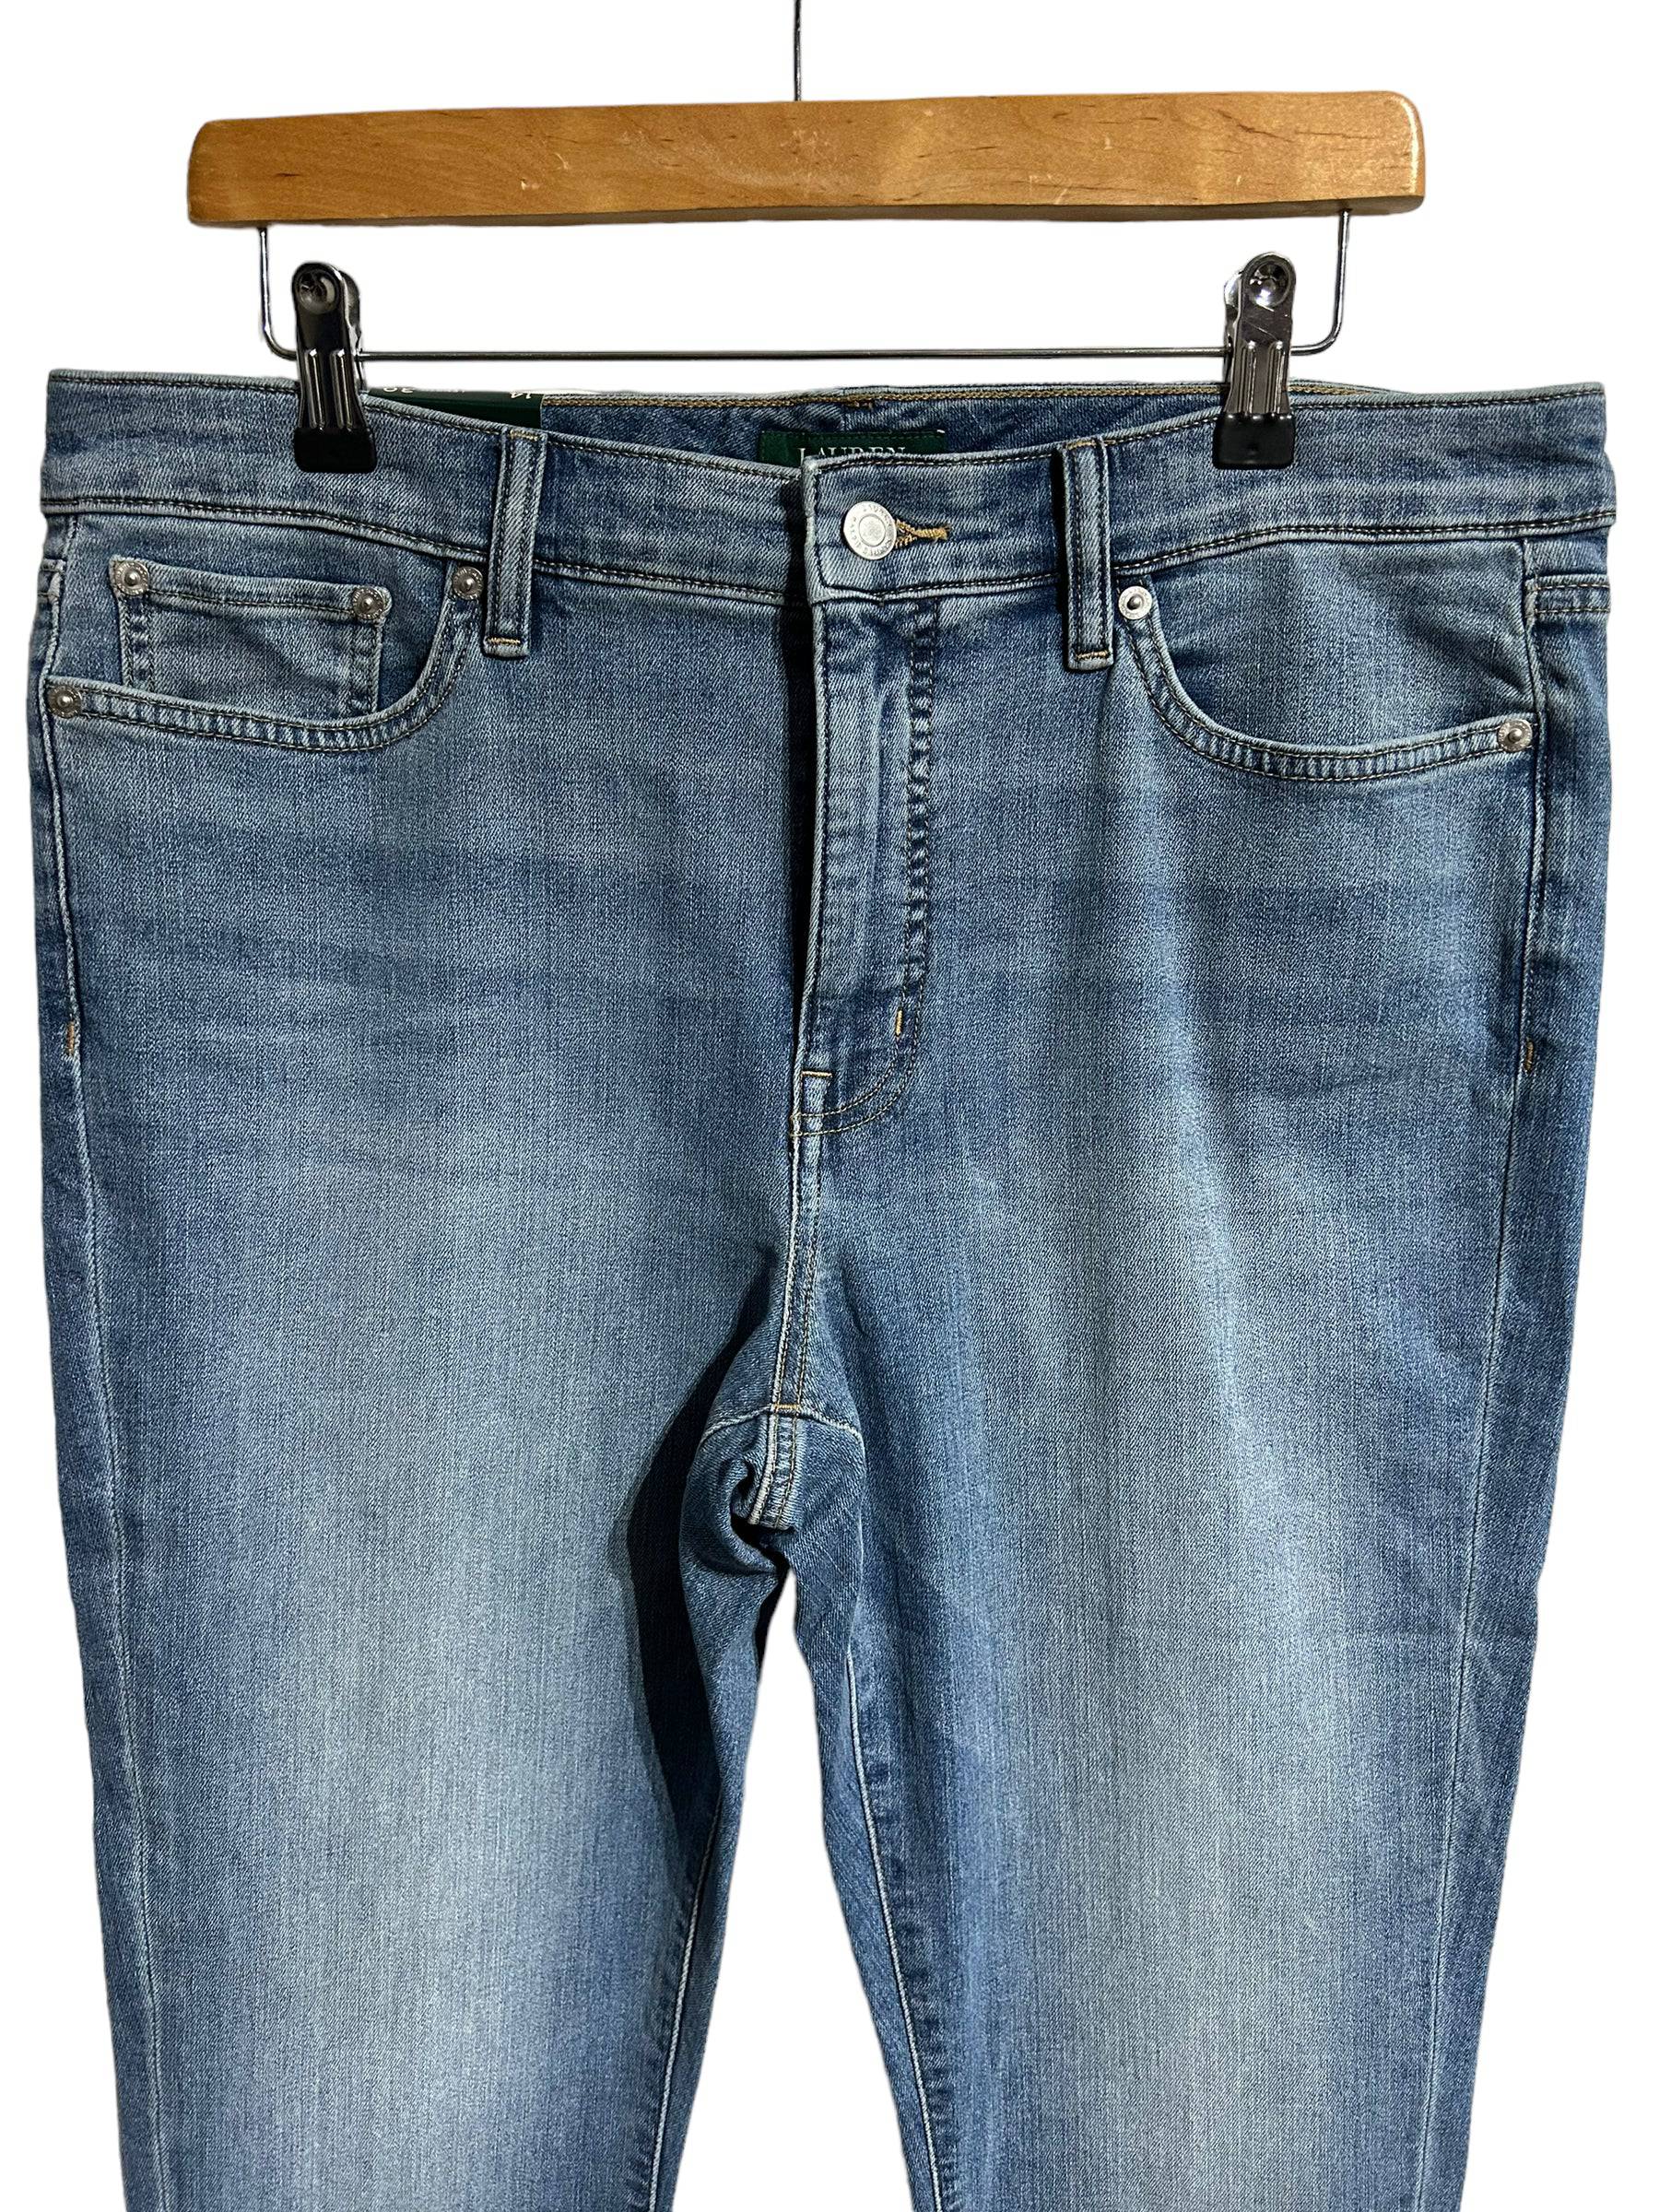 Lauren Ralph Lauren Premier Skinny Slimming Fit Jeans - Recurring.Life